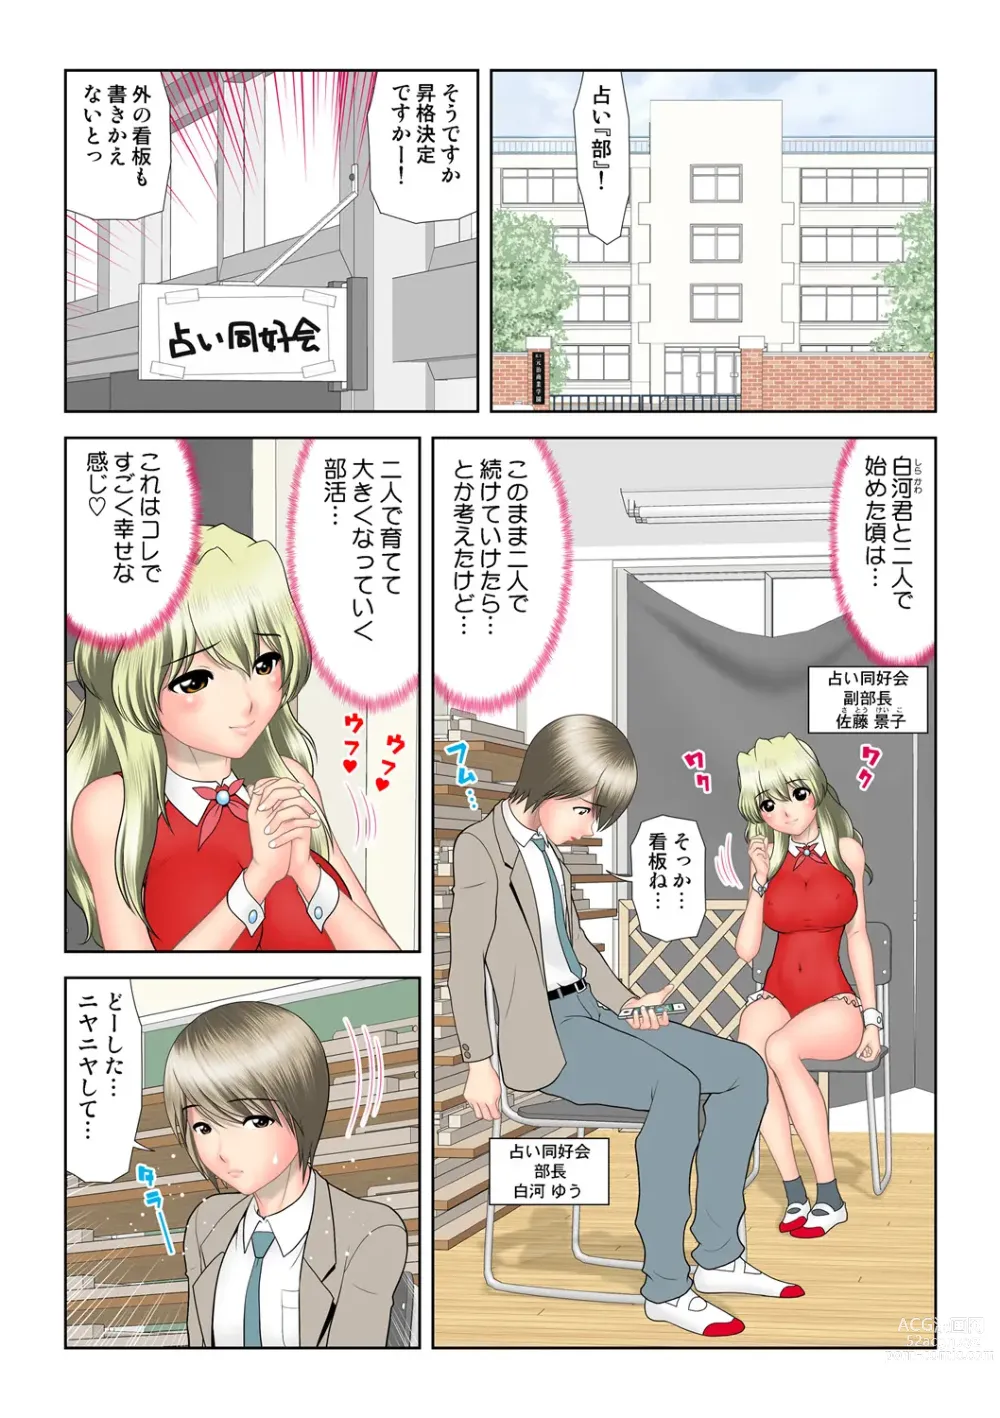 Page 115 of manga HiME-Mania Vol. 47